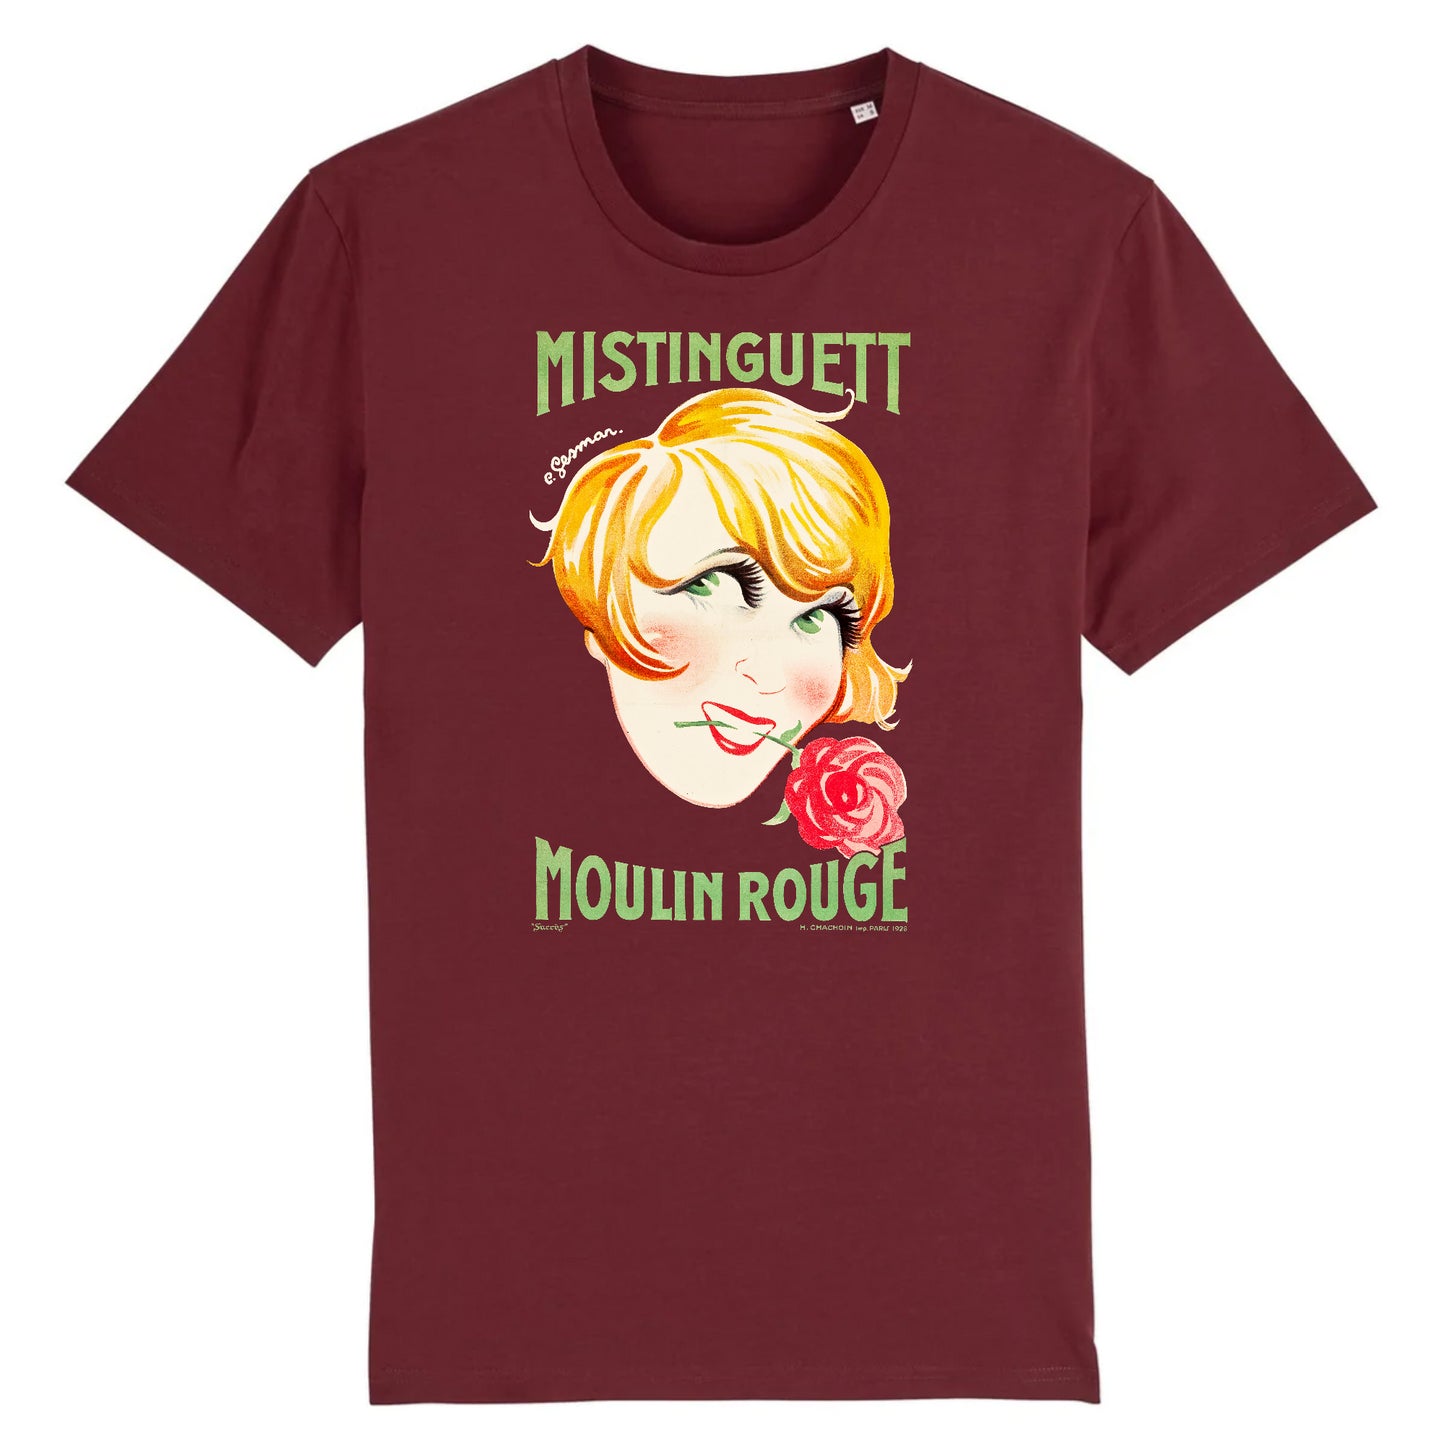 Mistinguett (Moulin Rouge) by Charles Gesmer, 1926 - Organic Cotton T-Shirt